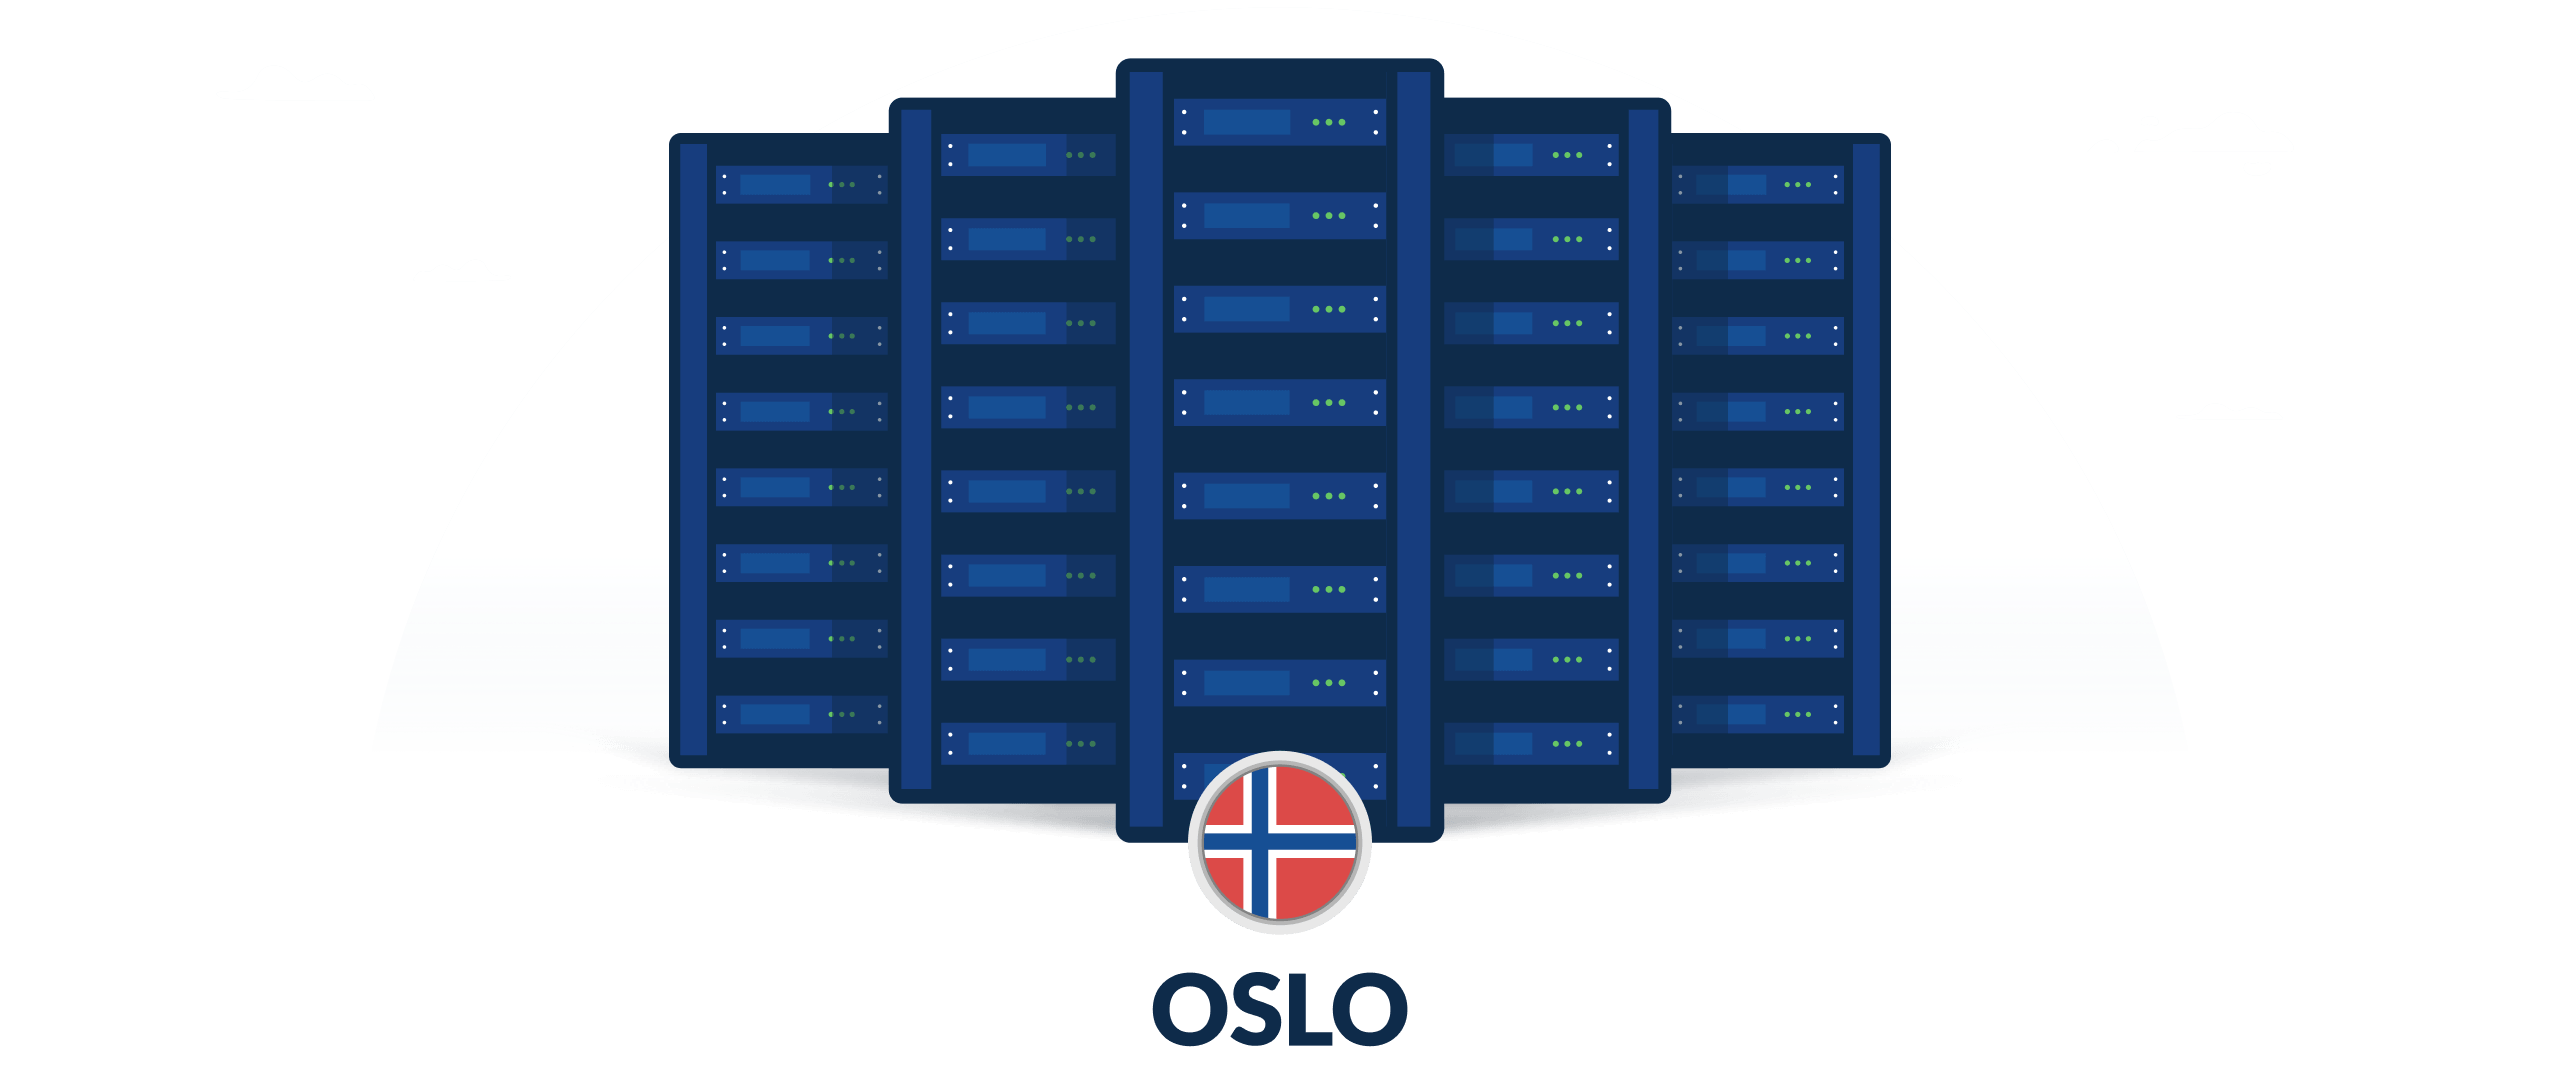 VPN servers in Oslo, Norway